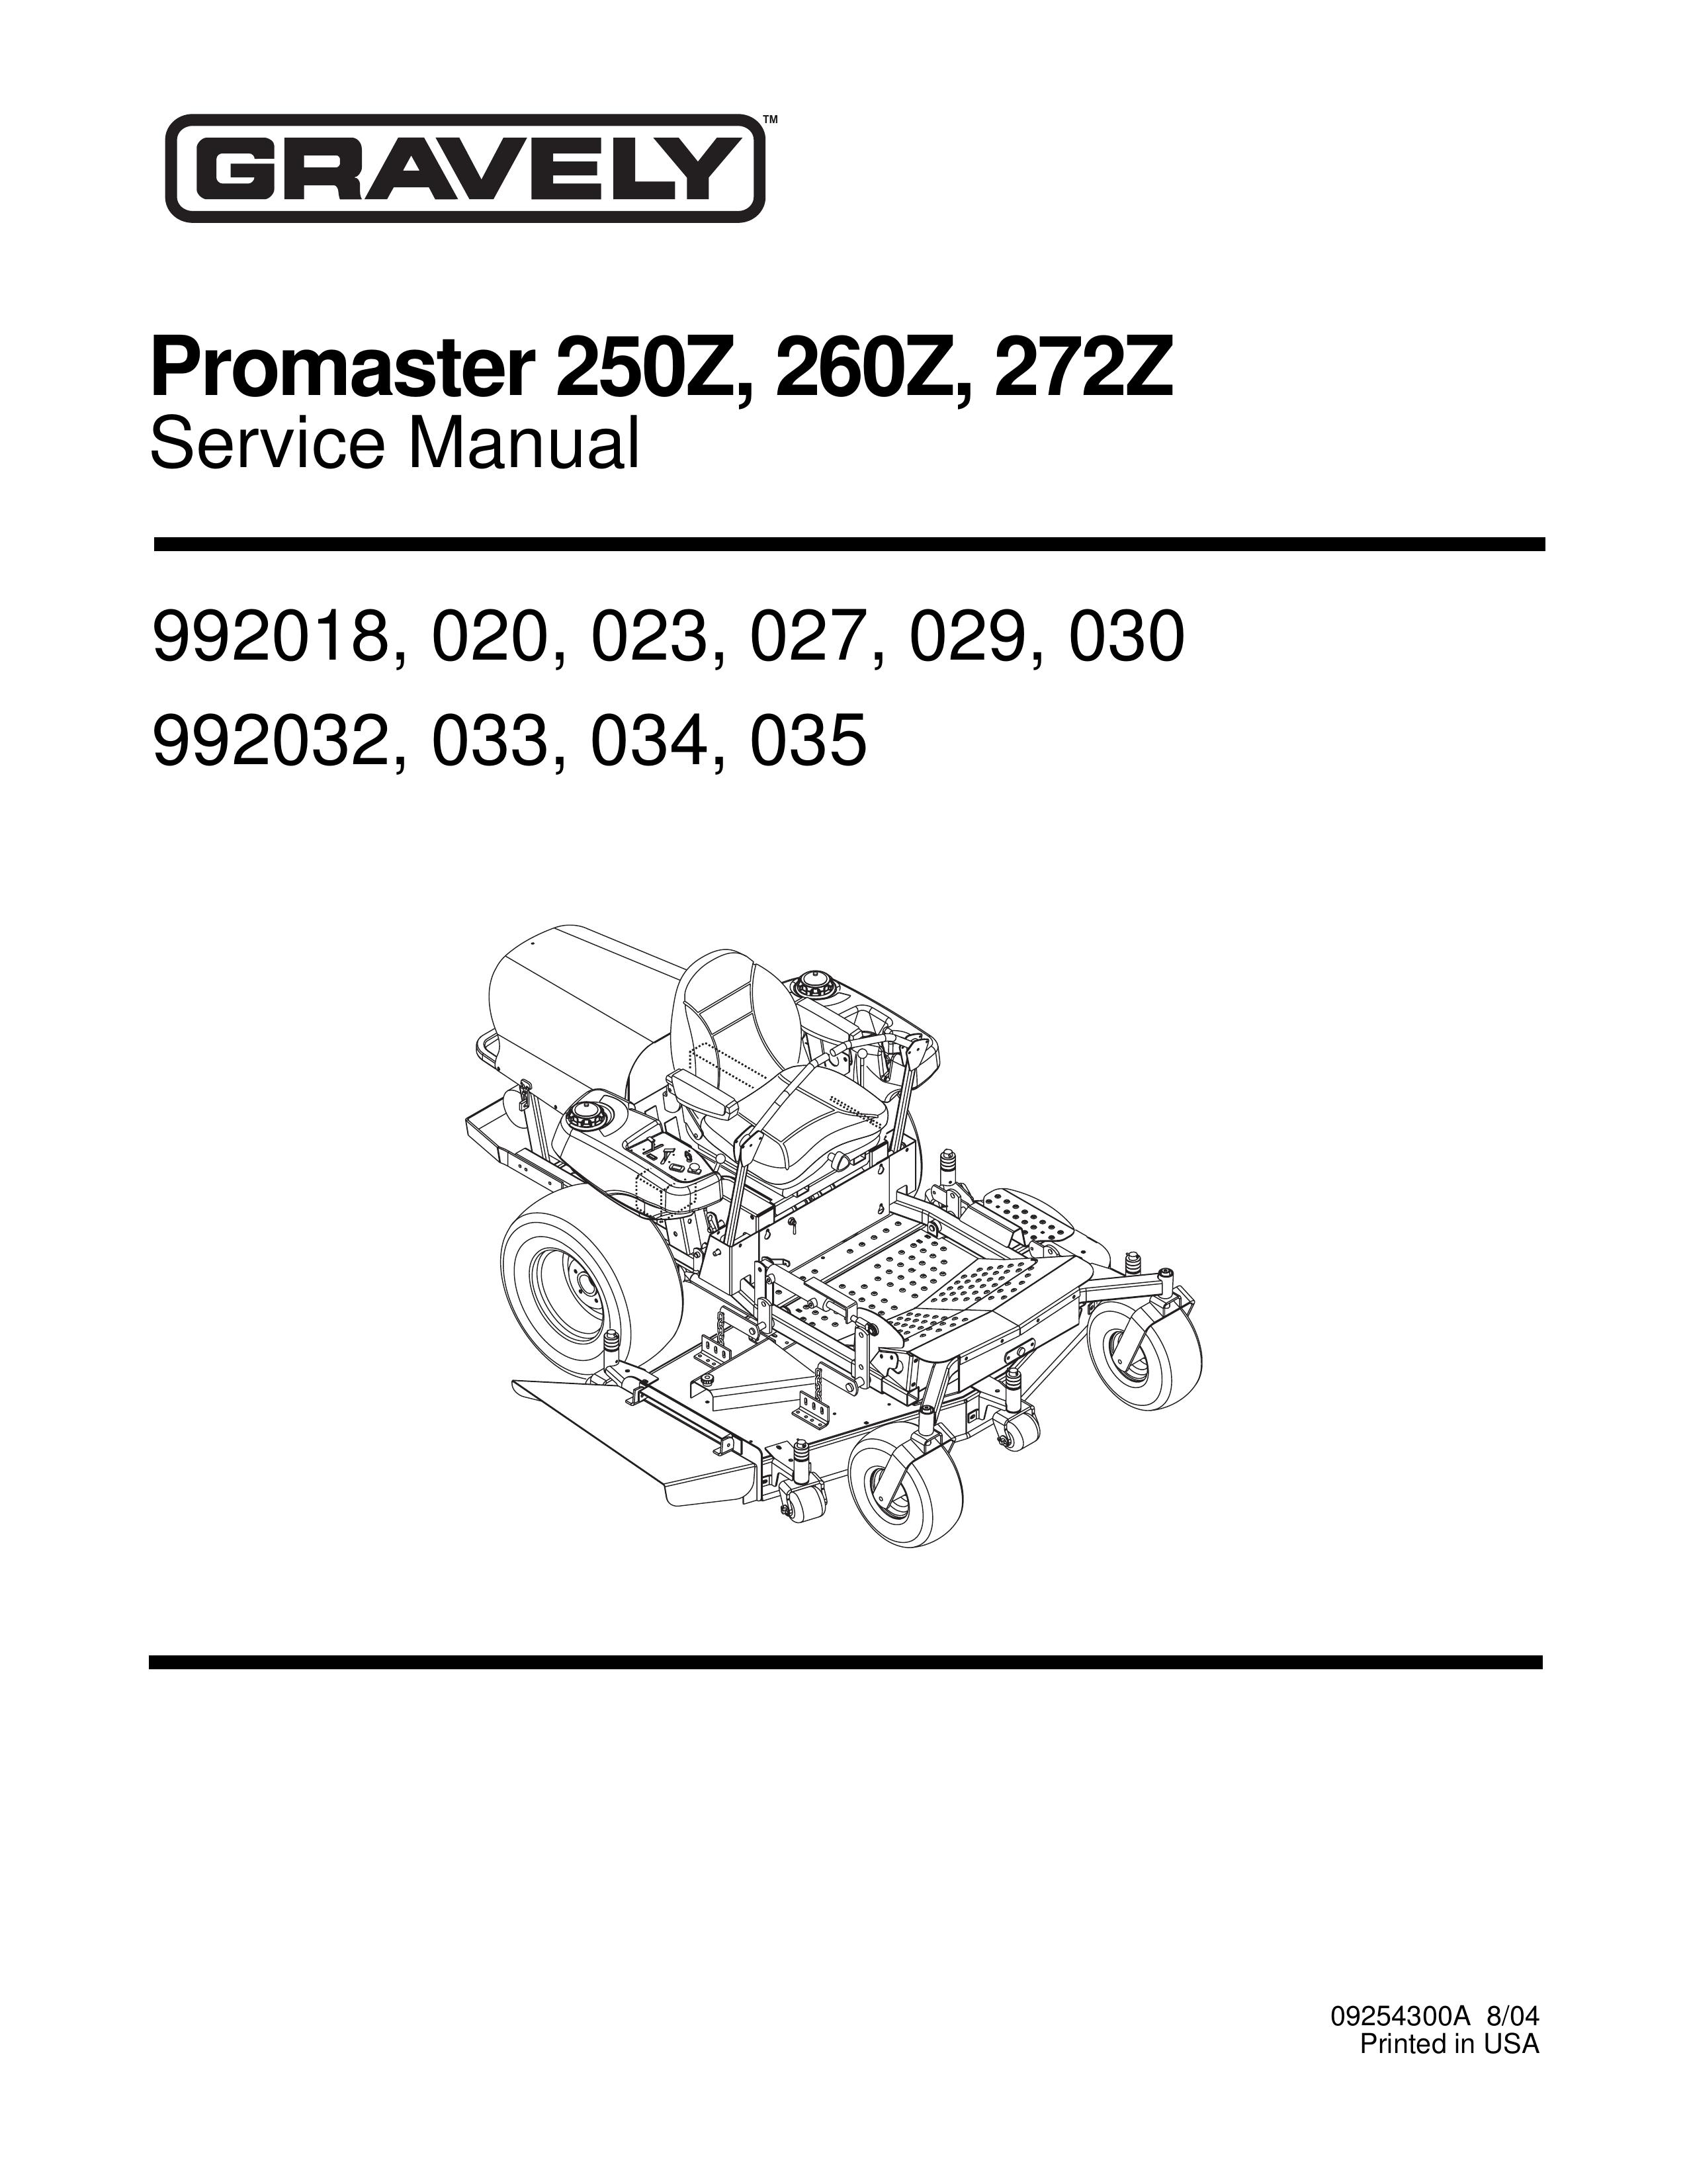 Gravely 250Z Lawn Mower User Manual